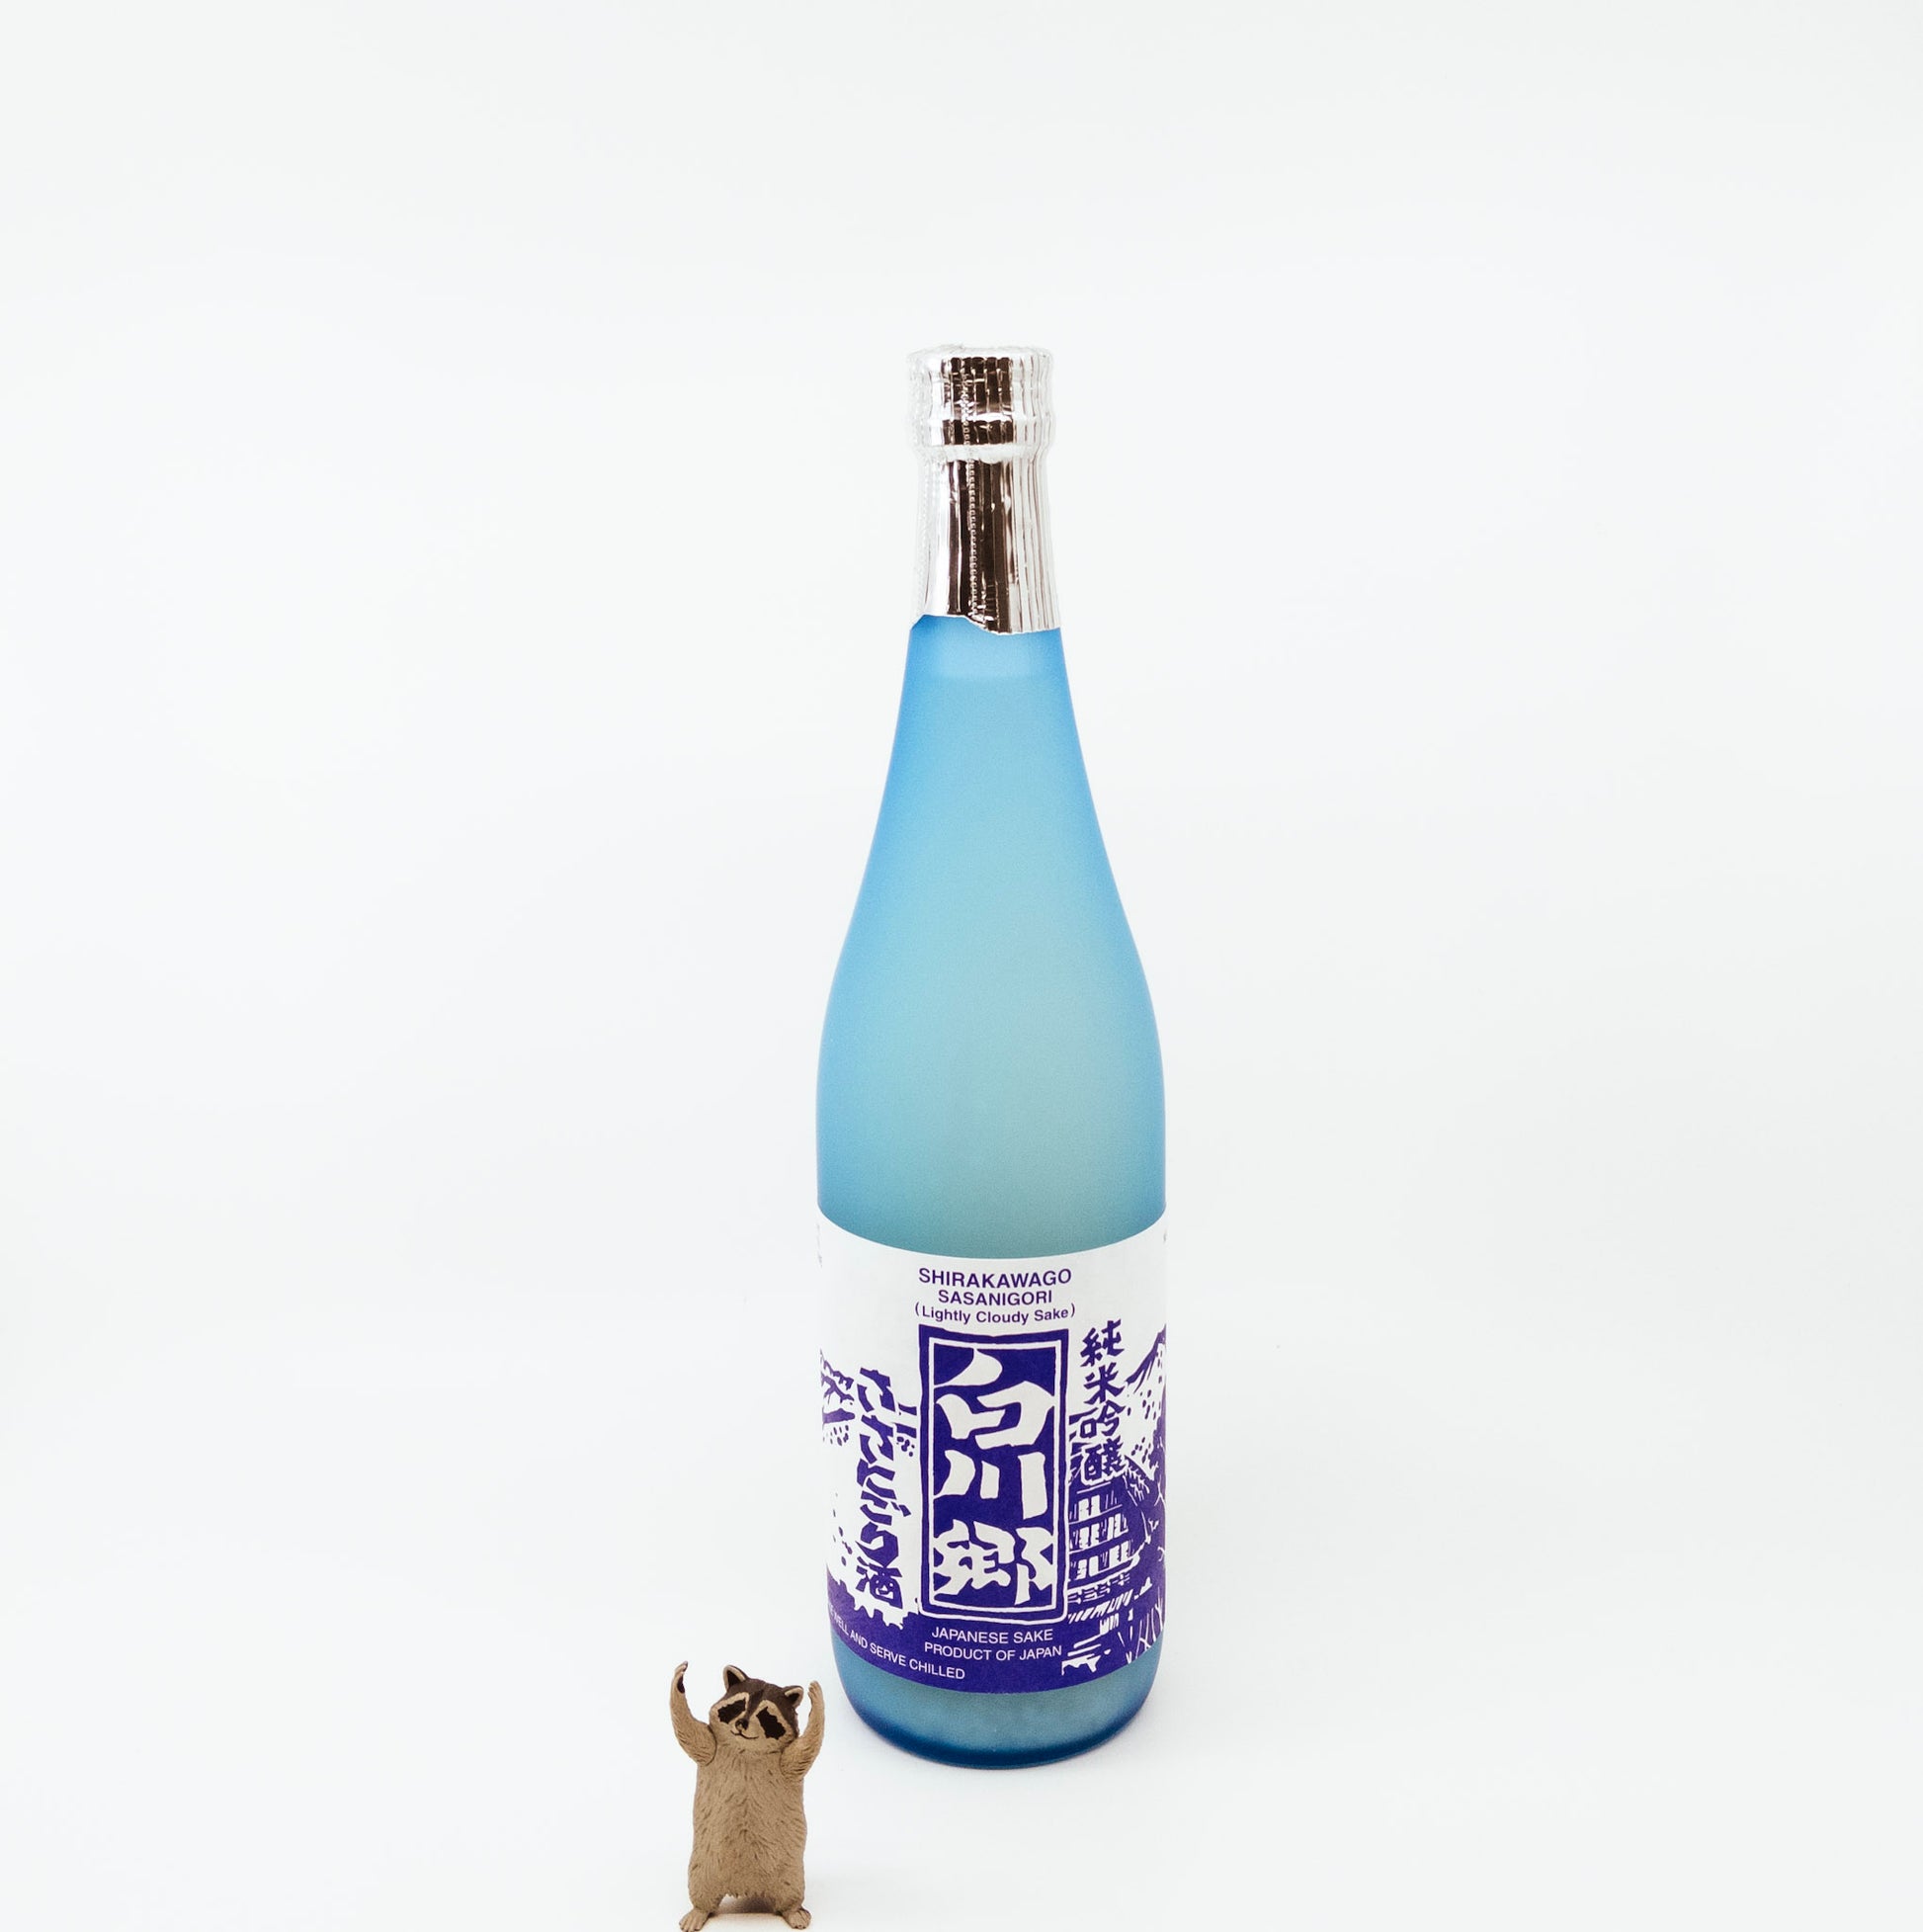 blue glass bottle next to raccoon figurine